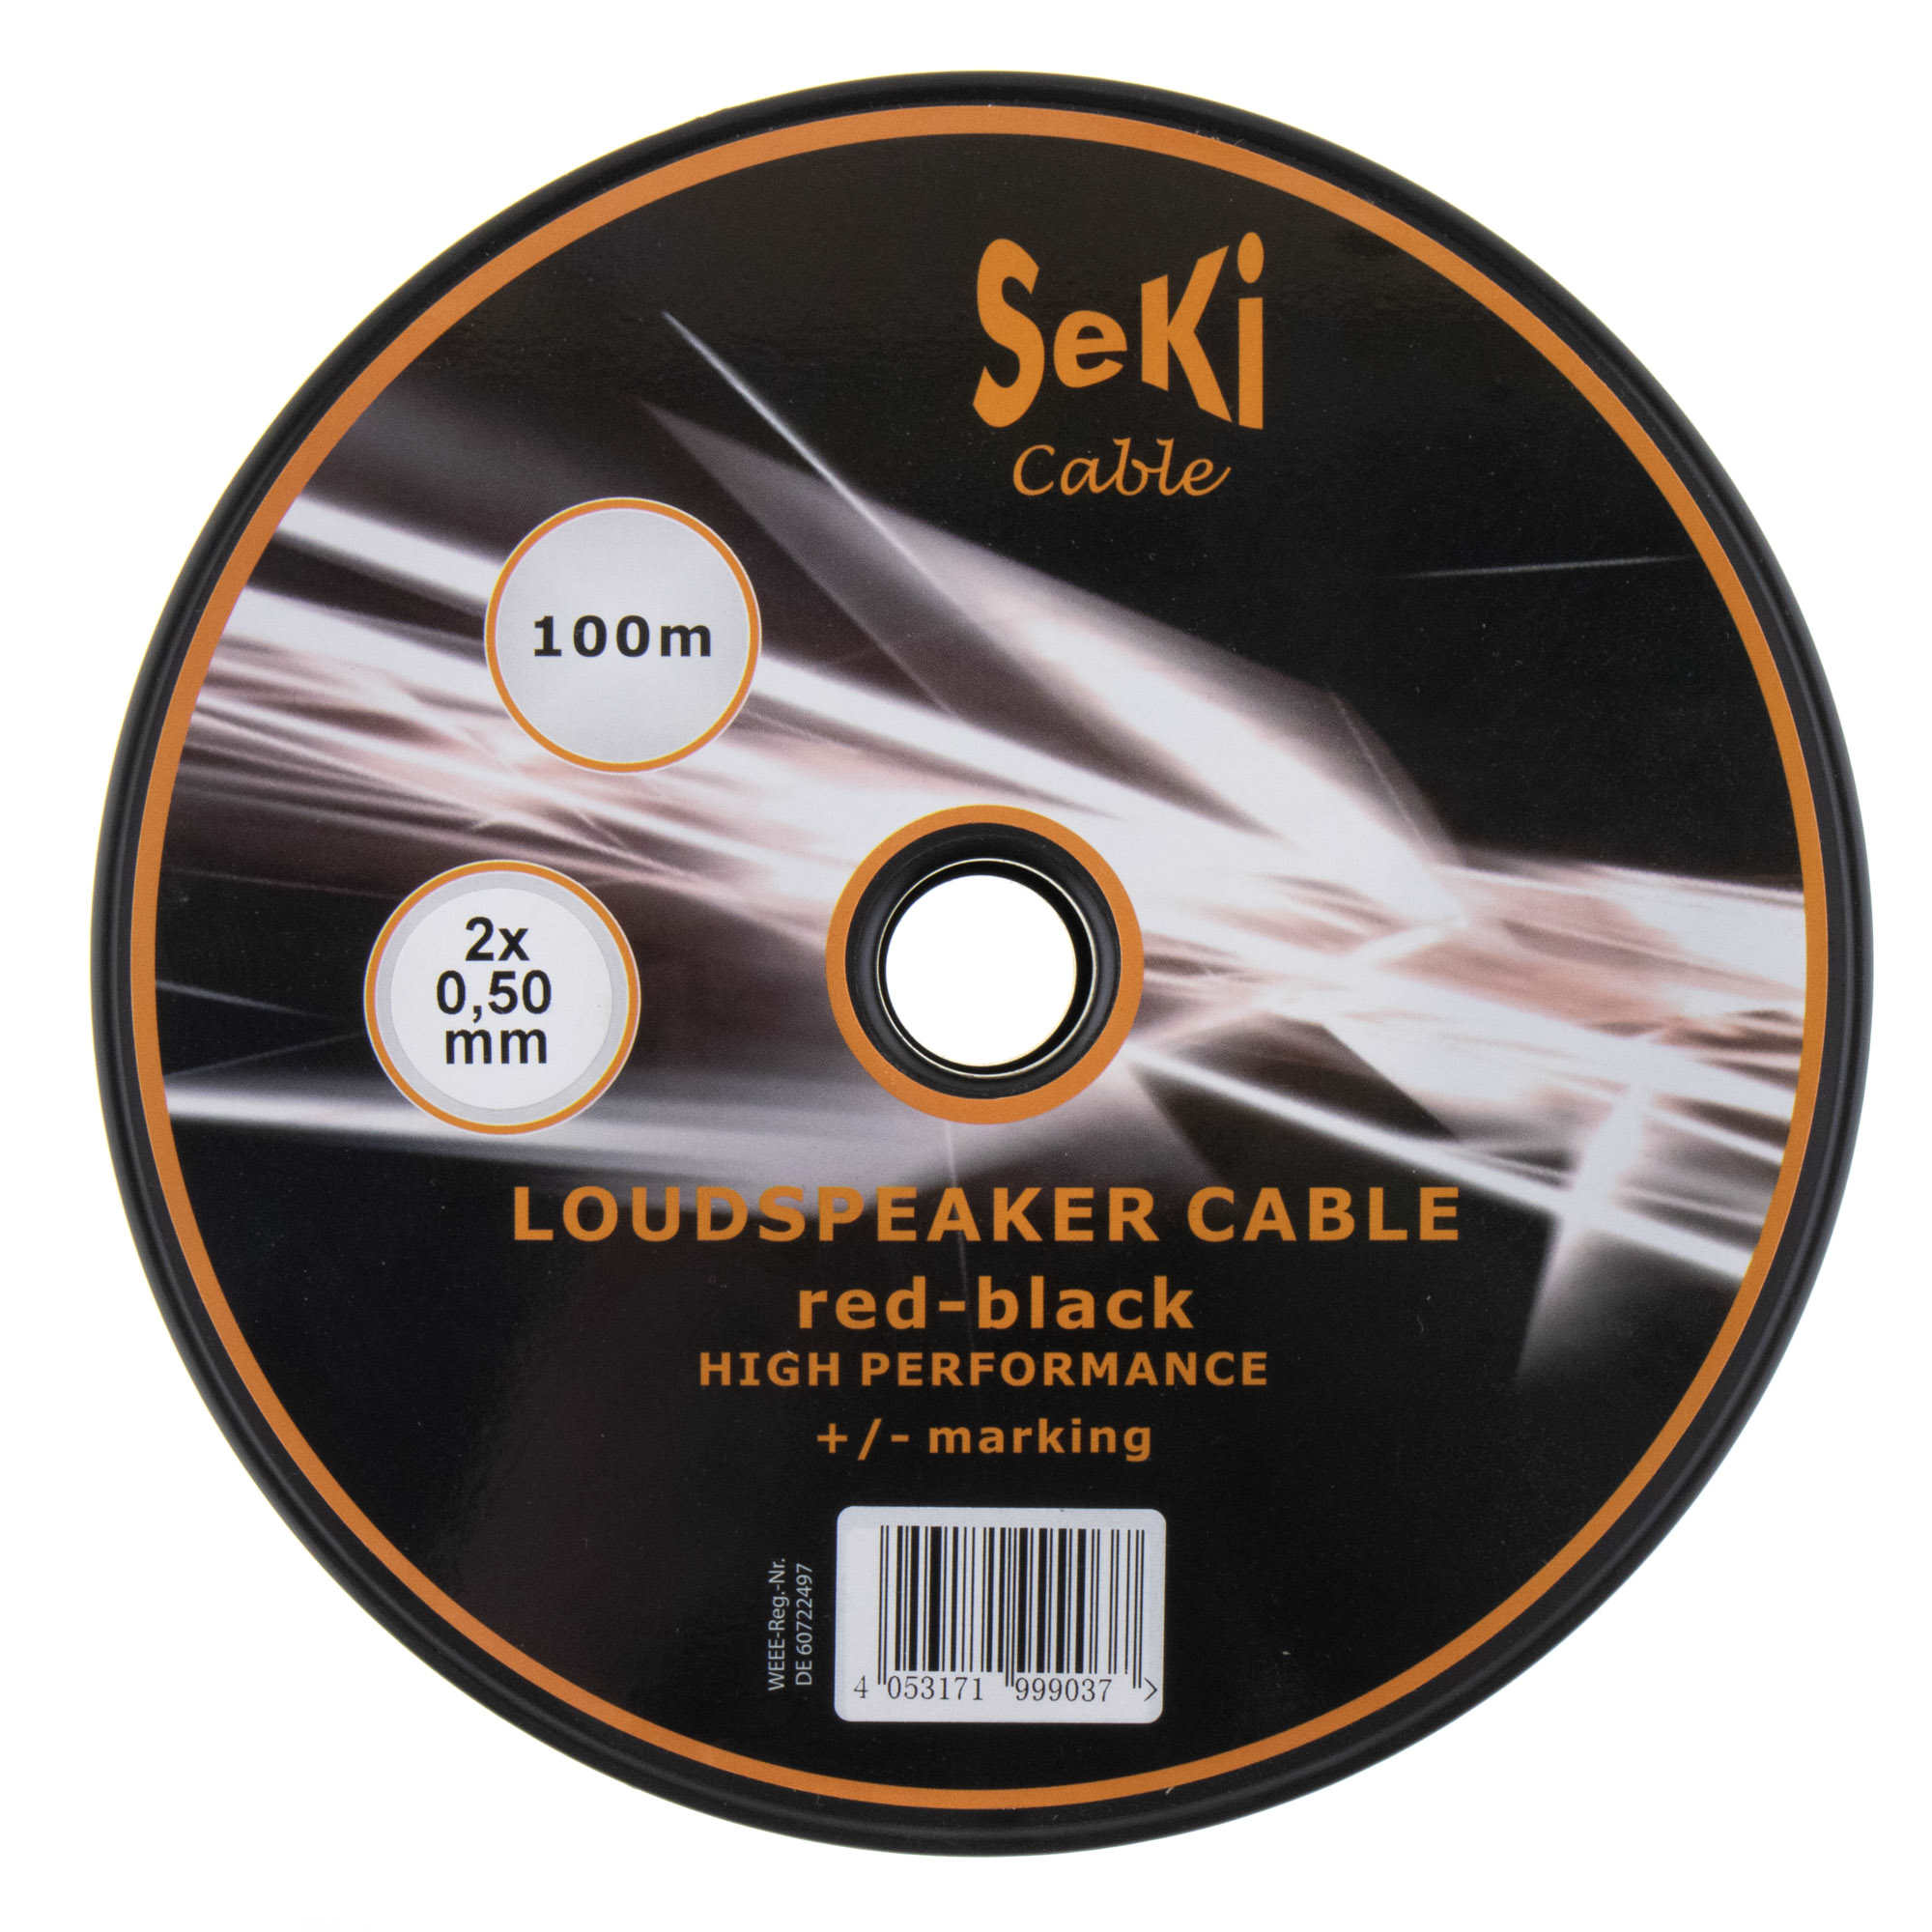 Loudspeaker cable red/black 100m 0.50mm